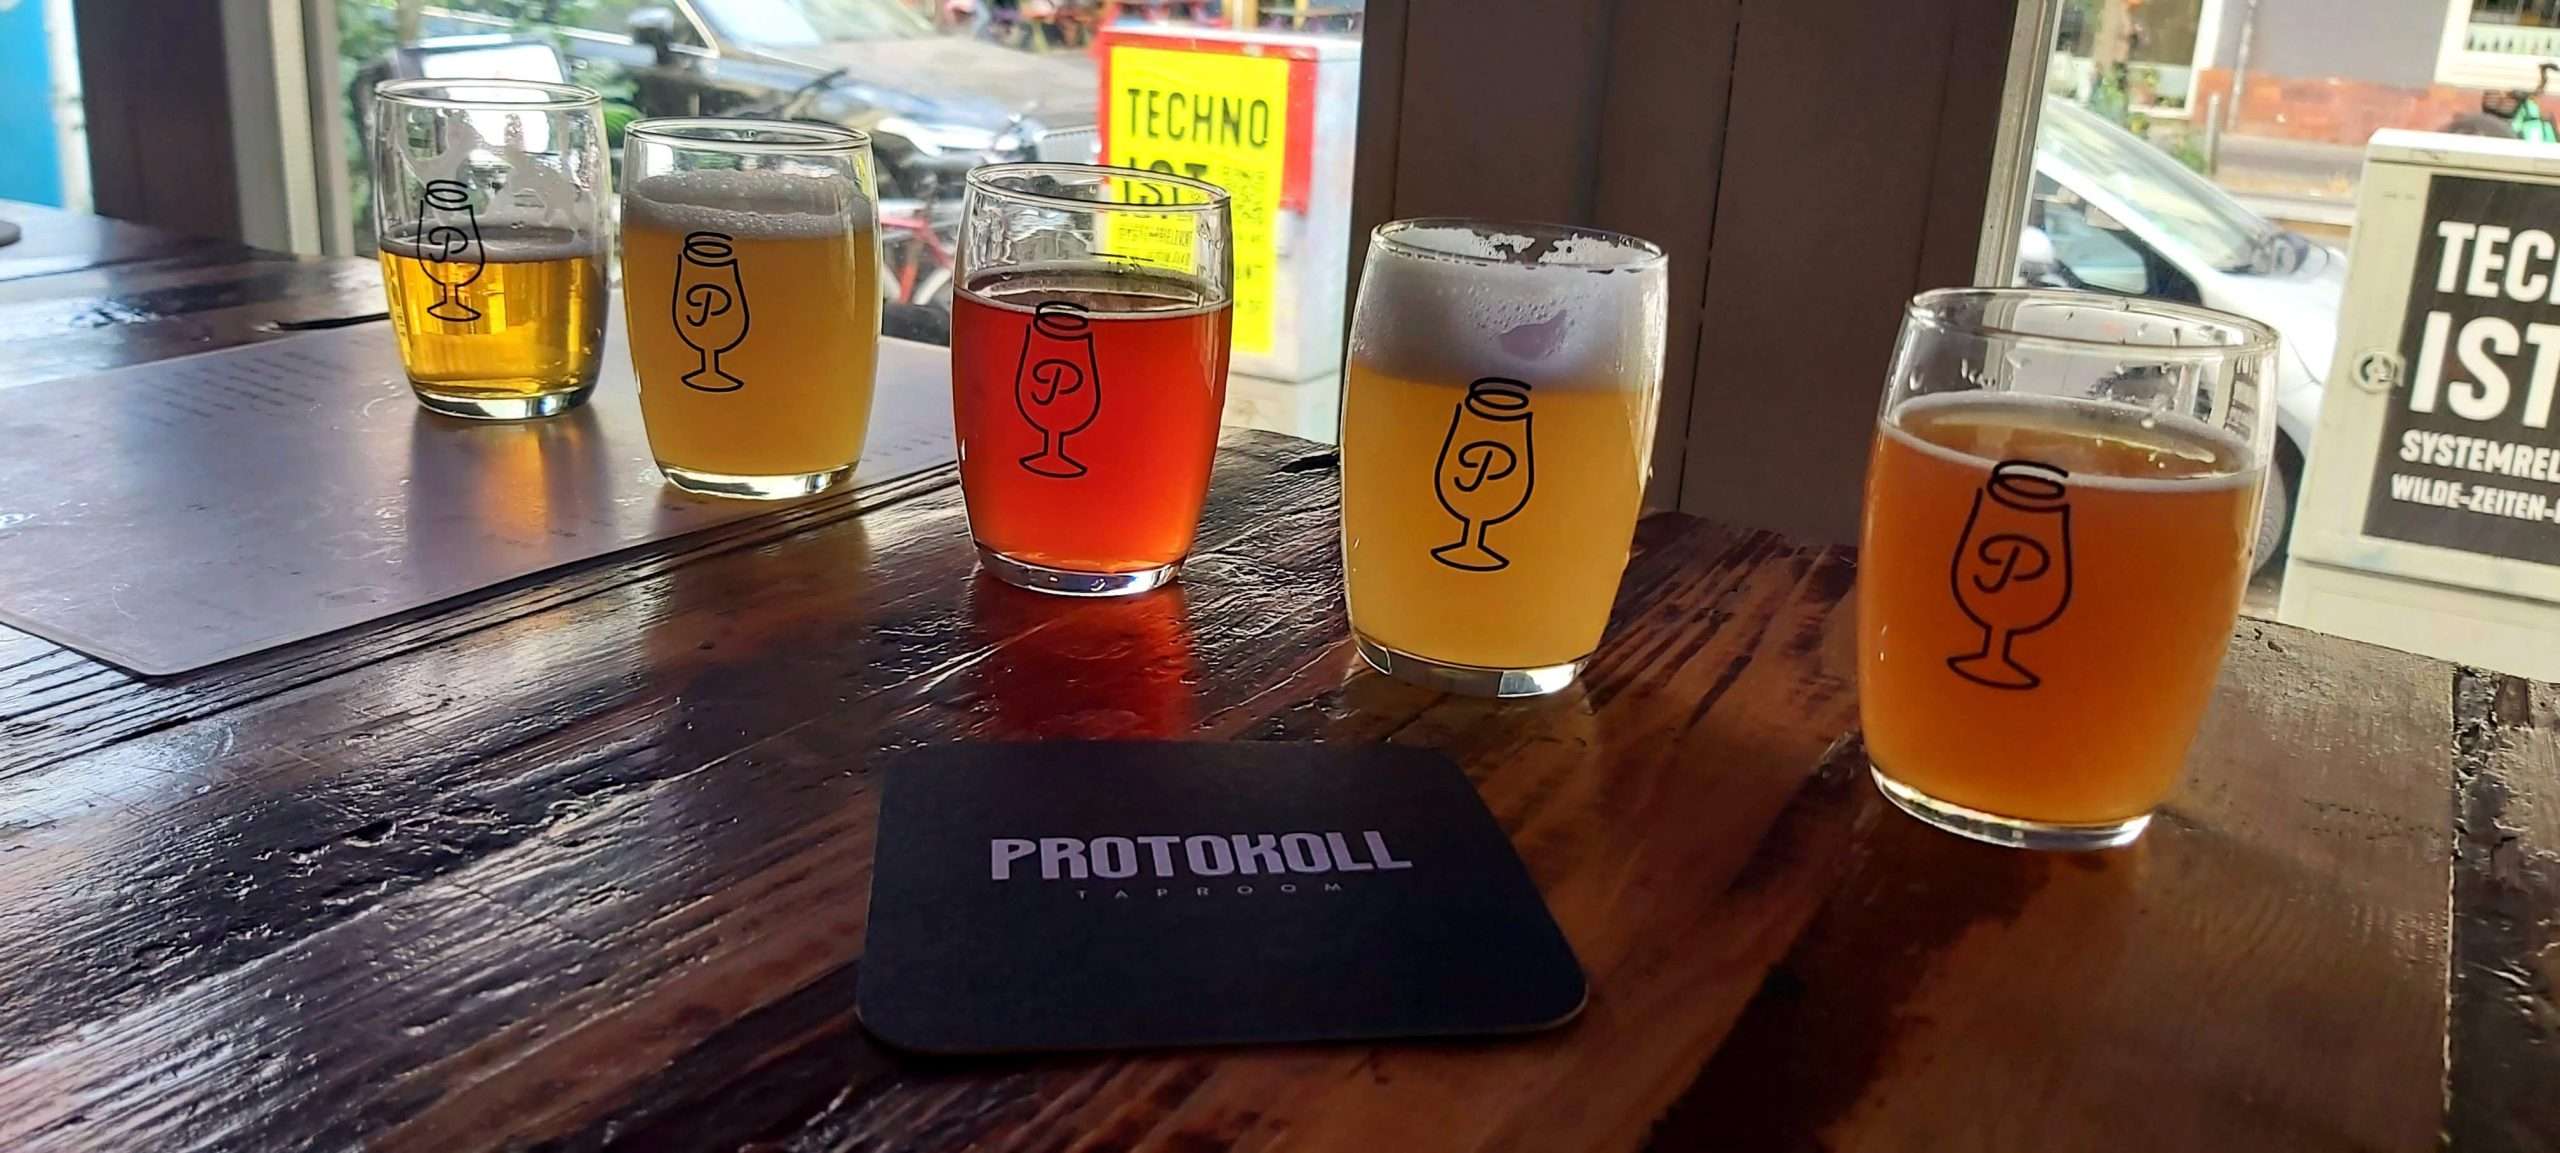 Flight of craft beers from Protokoll craft beer bar in Friedrichshain